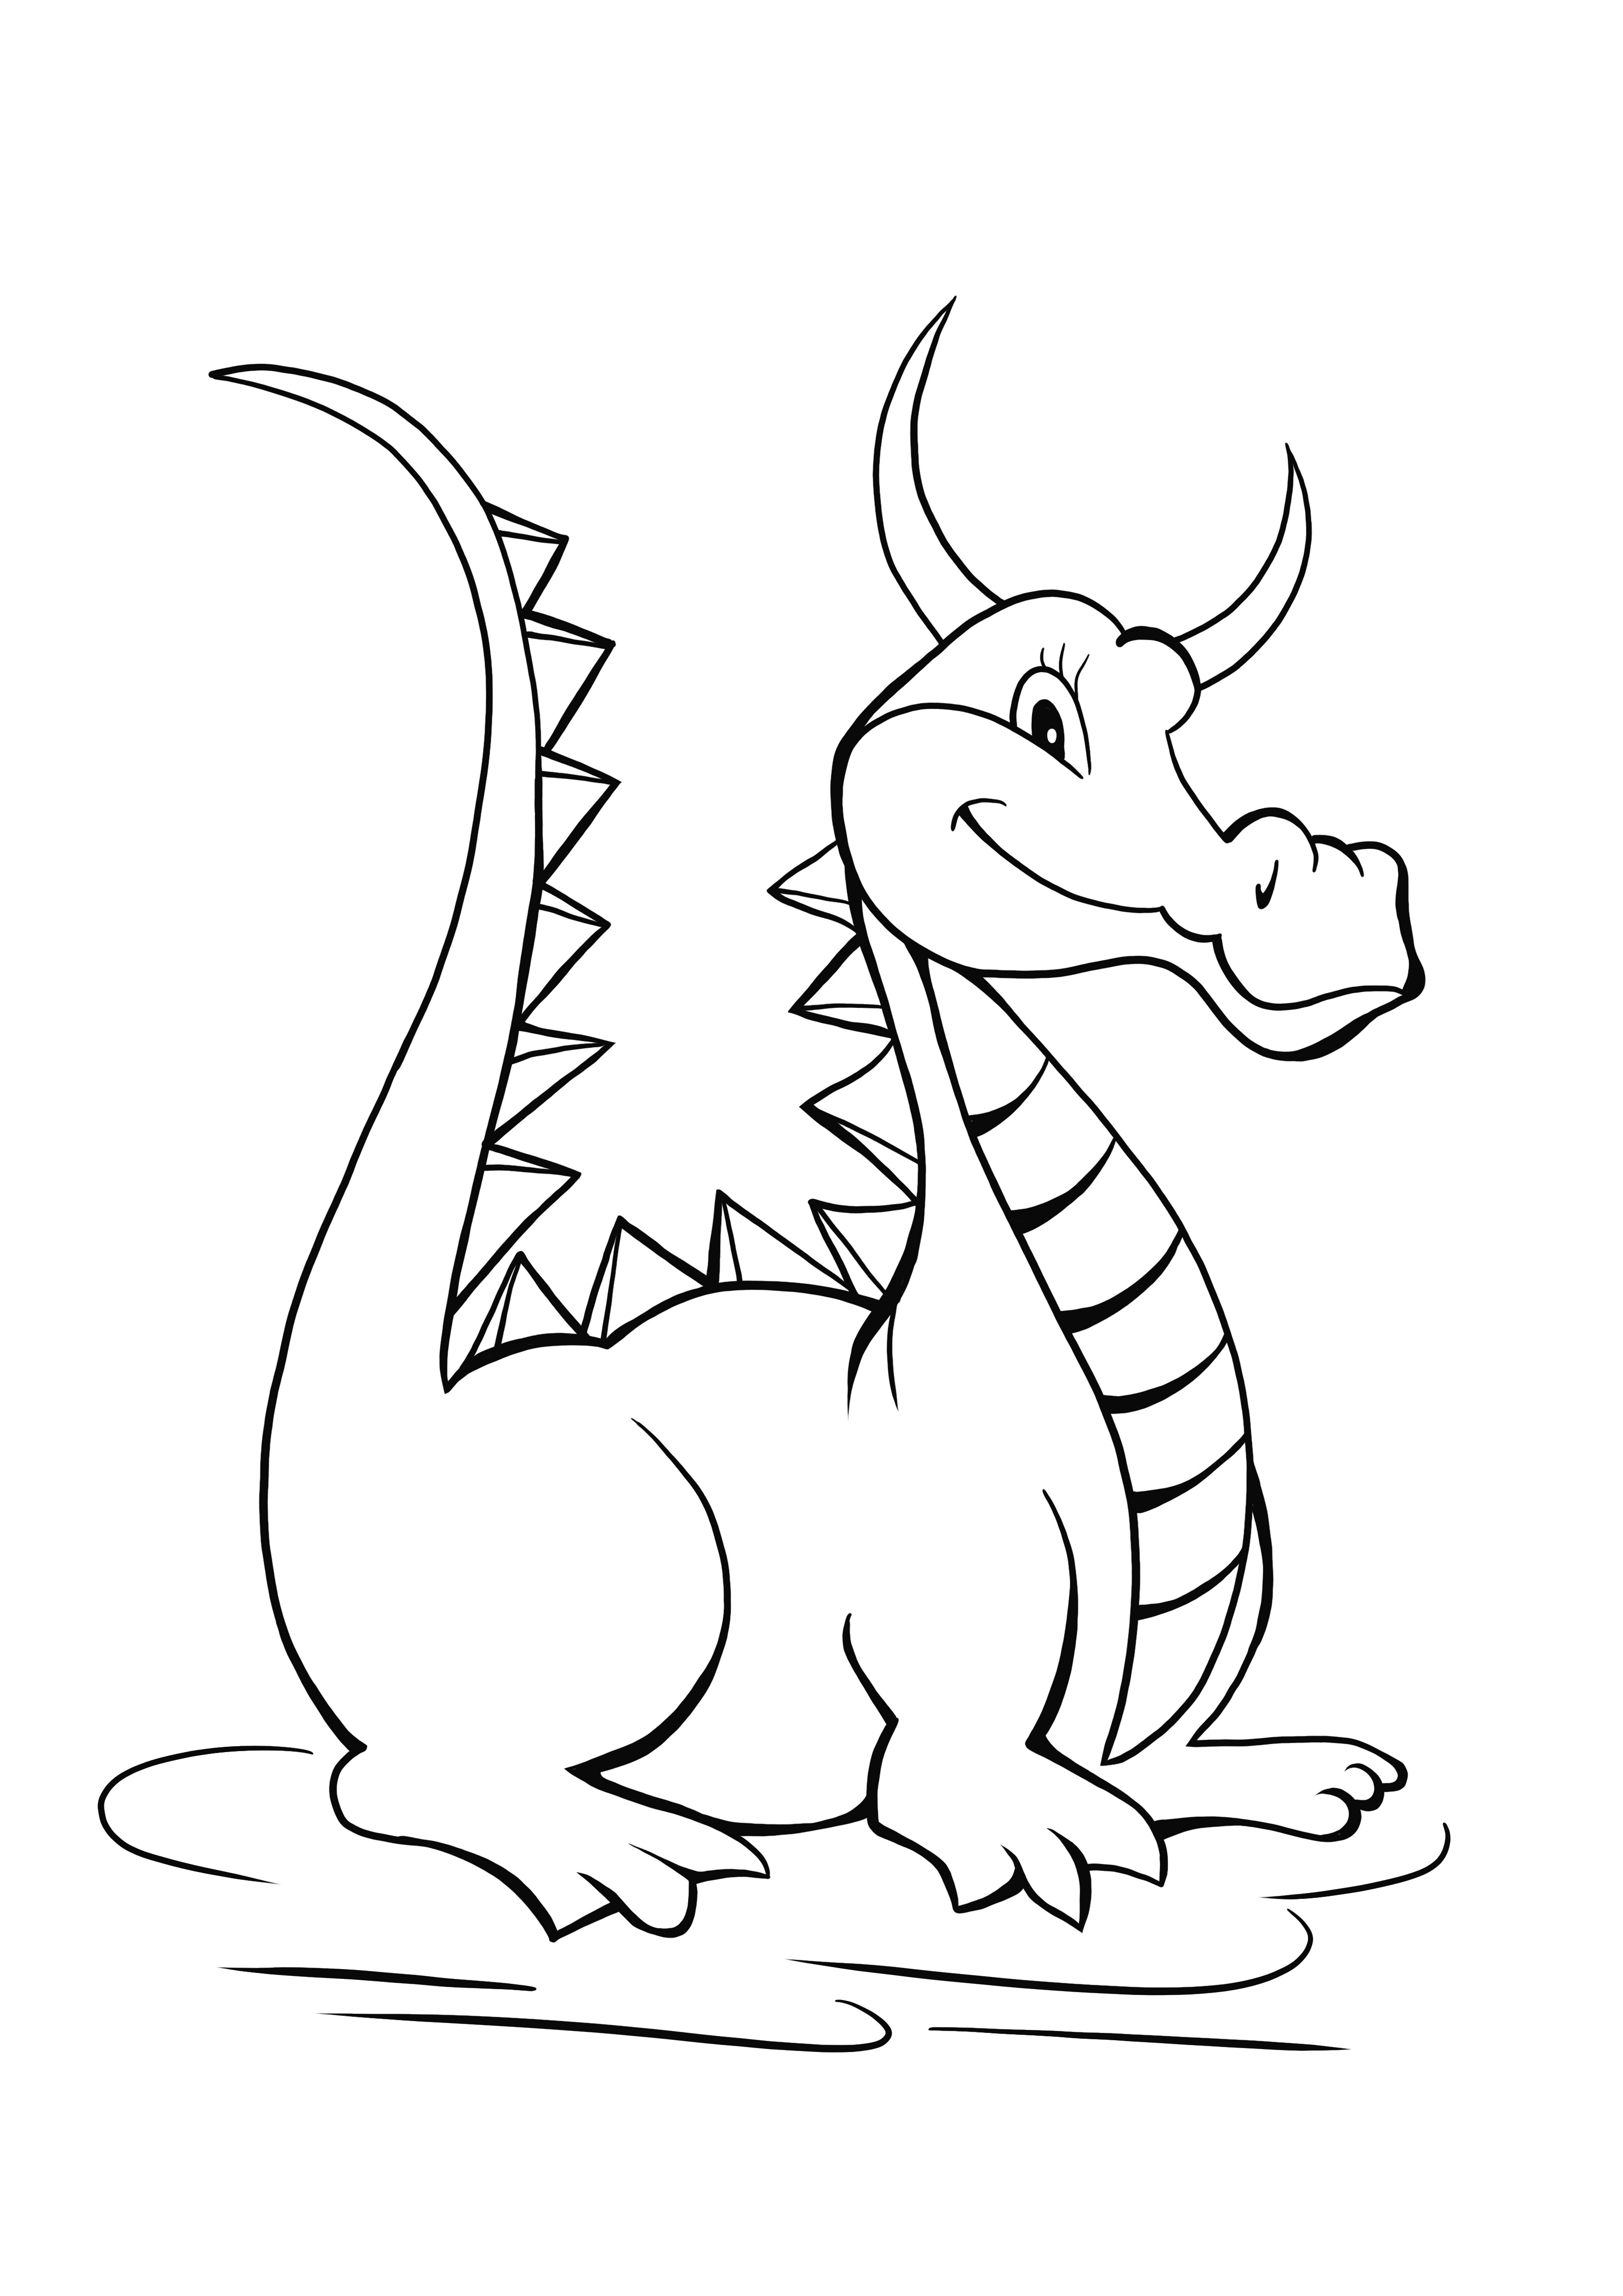 Dibujo de Dragon hembra para colorear e imprimir gratis